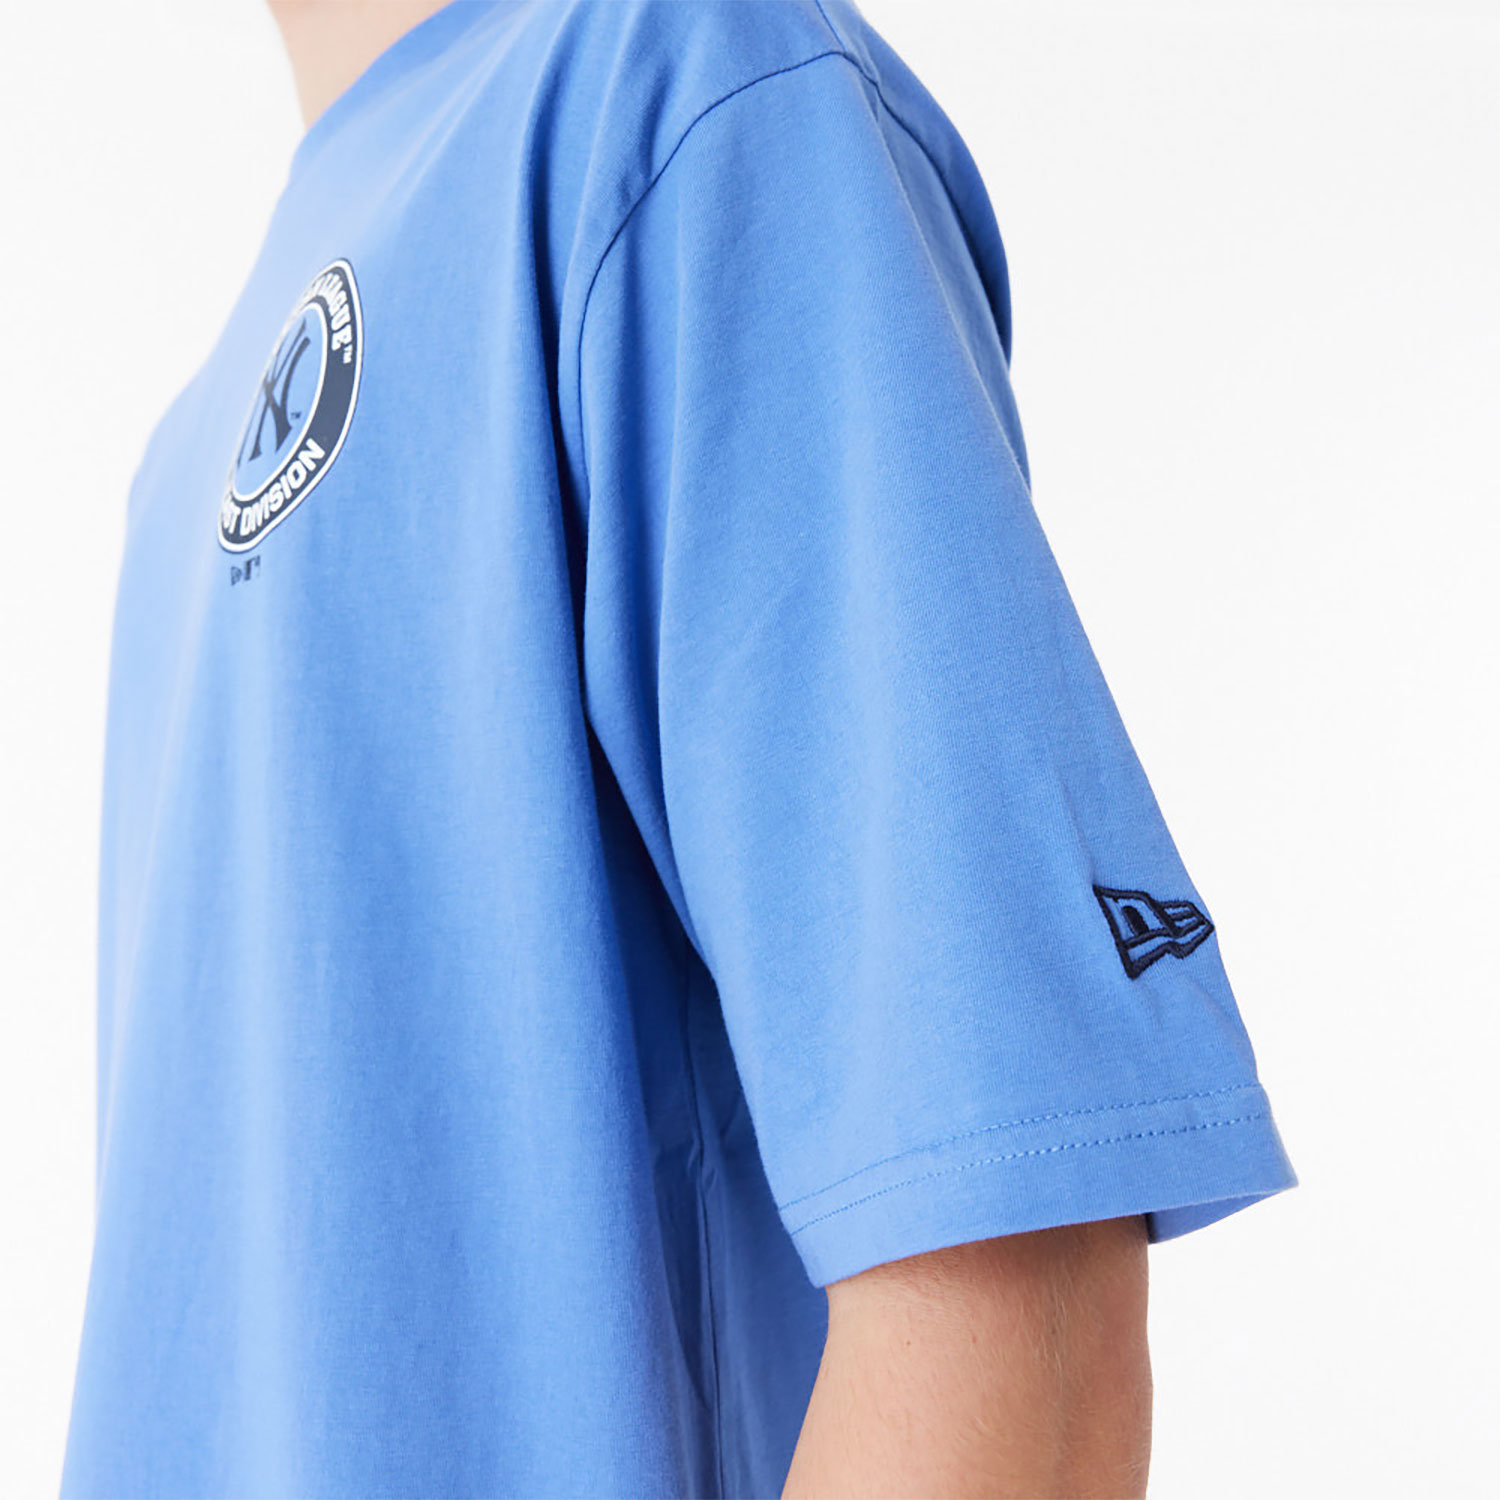 New York Yankees MLB Player Graphic Blue Oversized T-Shirt